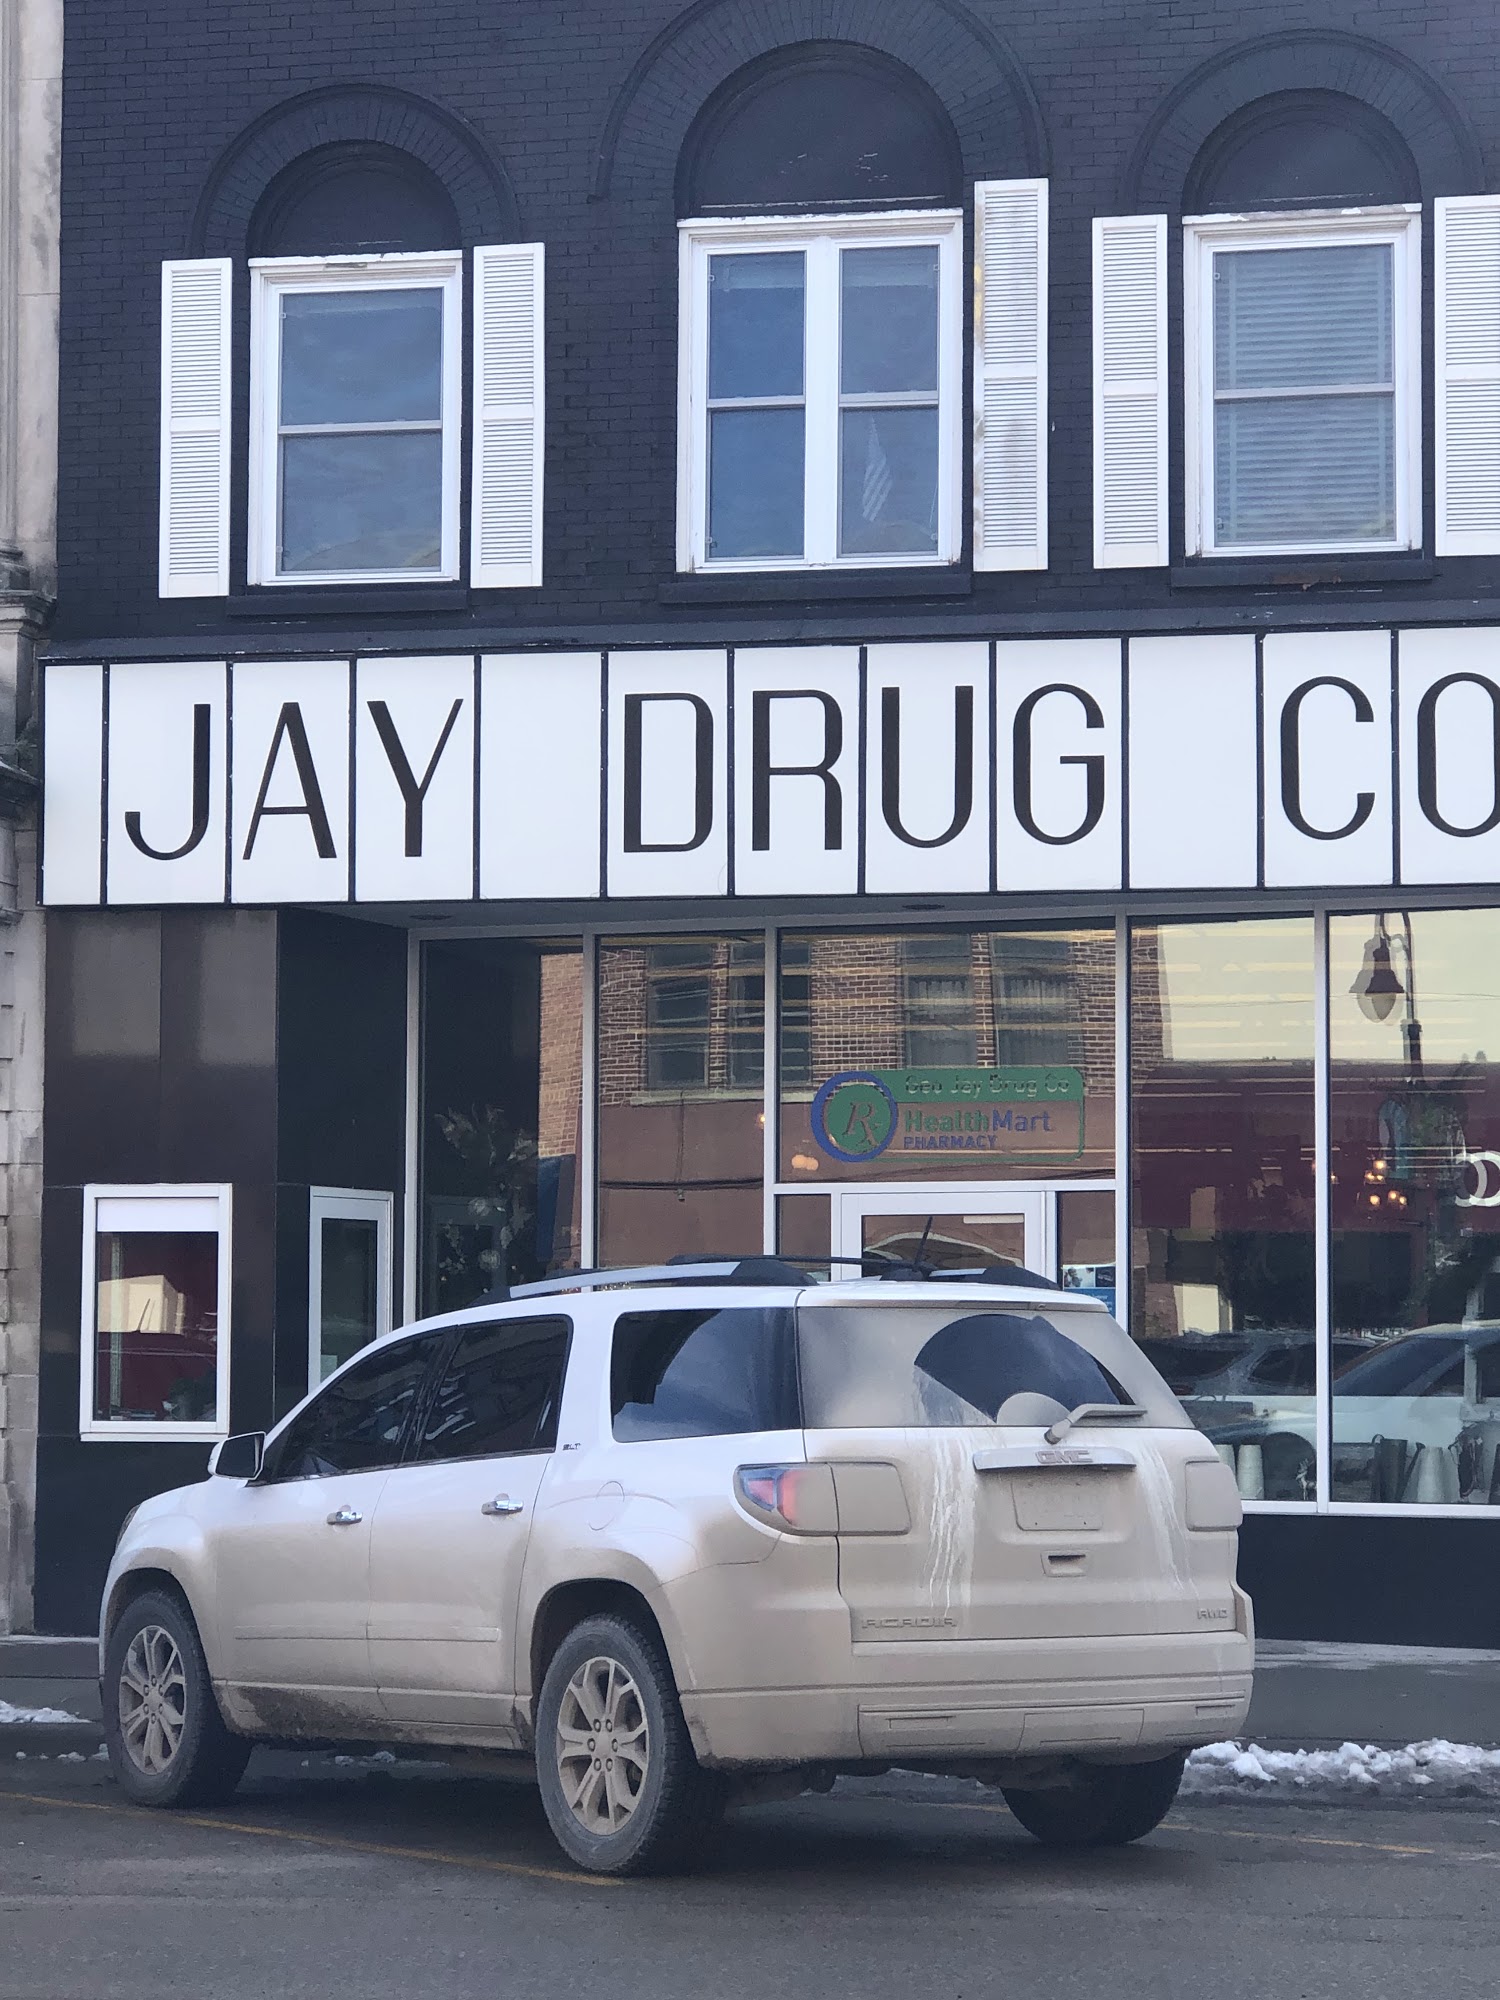 George Jay's Drug Company